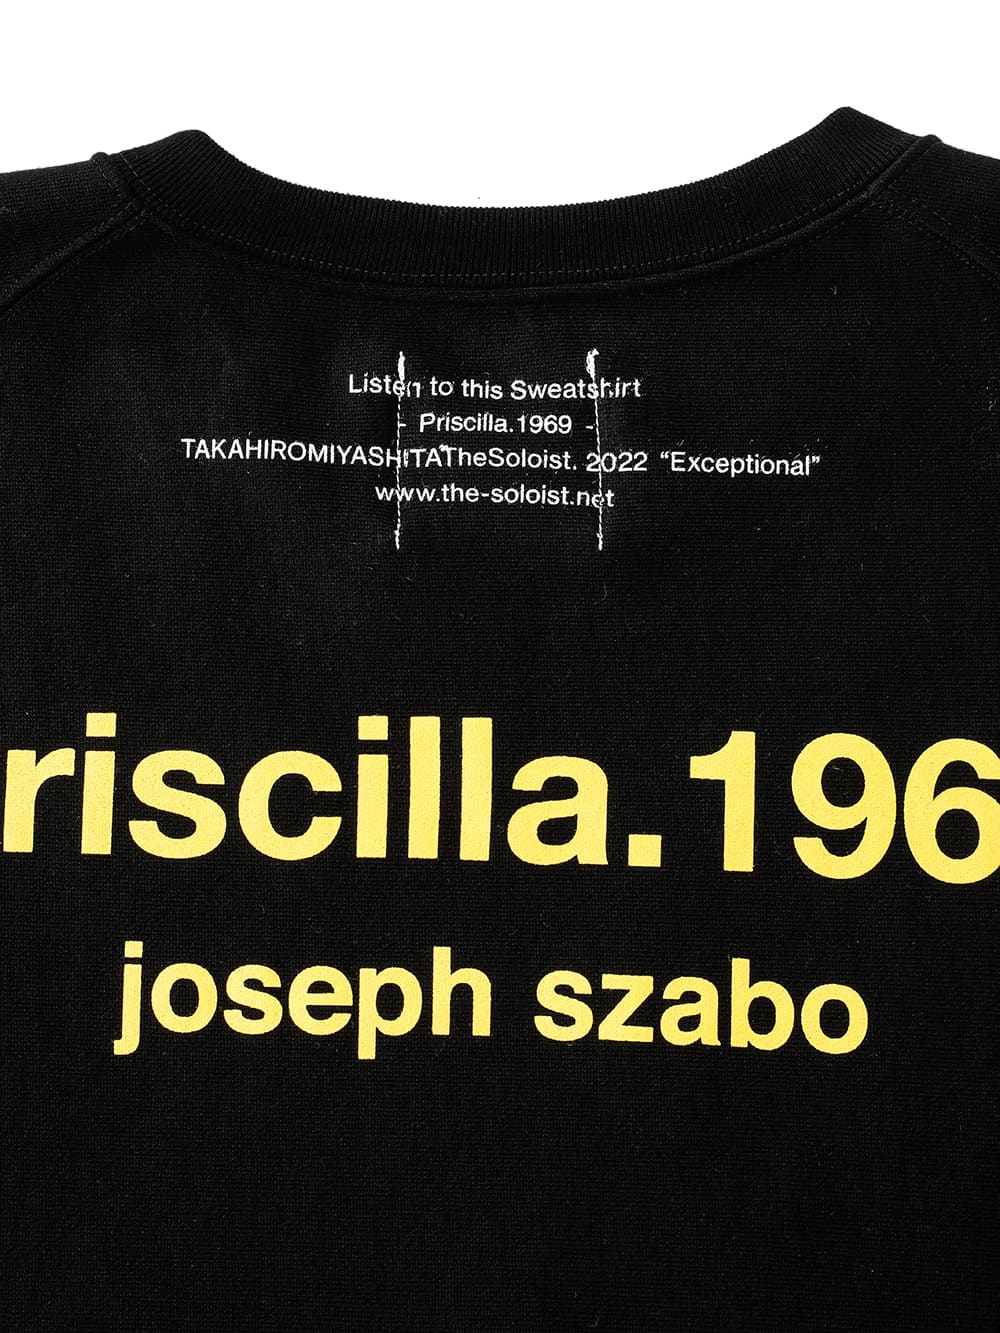 priscilla 1969 (オーバーサイズドクルーネックスウェットシャツ)